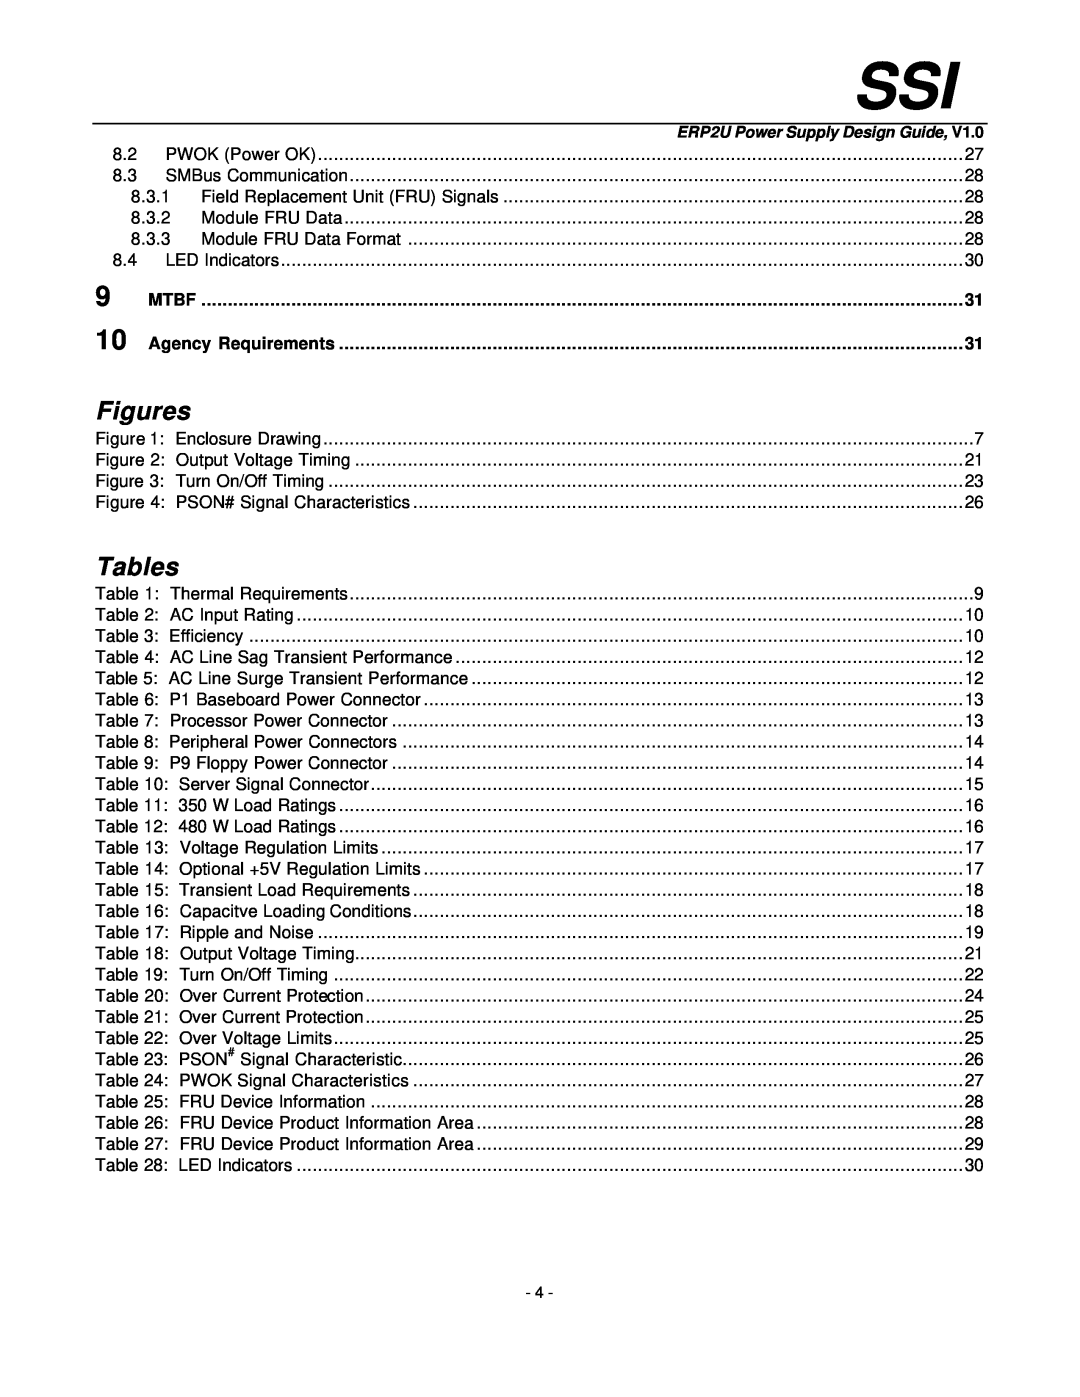 Intel ERP2U manual Figures, Tables, Mtbf, Agency Requirements 